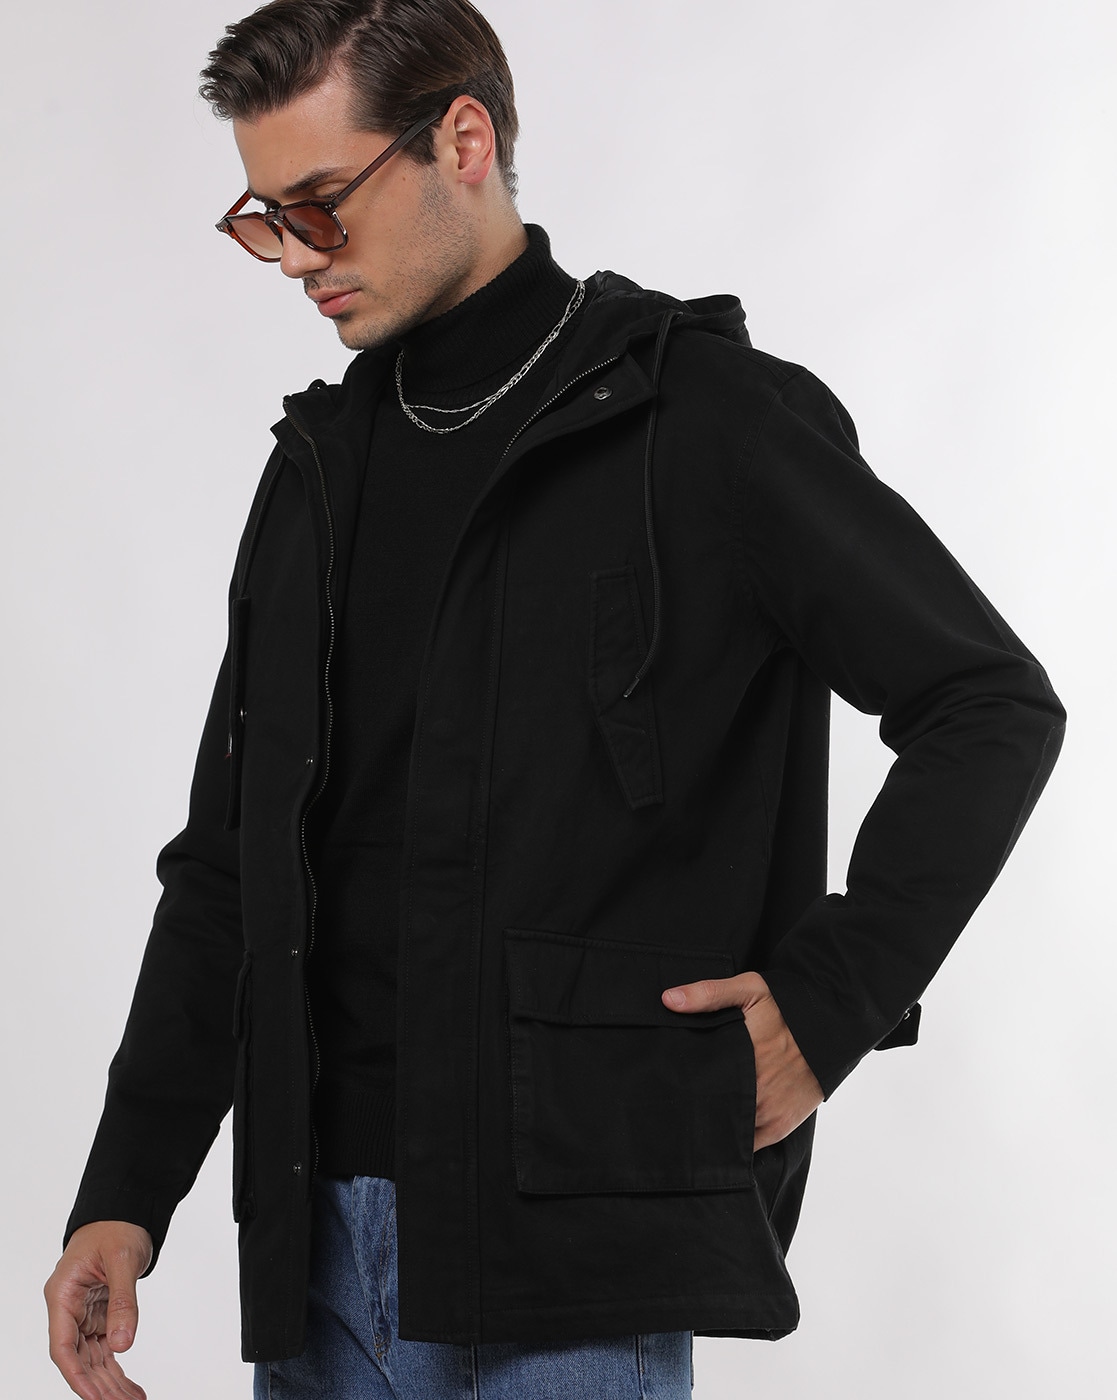 Buy Sunward Men's Casual Plus Size Hoodie Zipper Outdoor Sports Jacket ( Black, 6XL) at Amazon.in